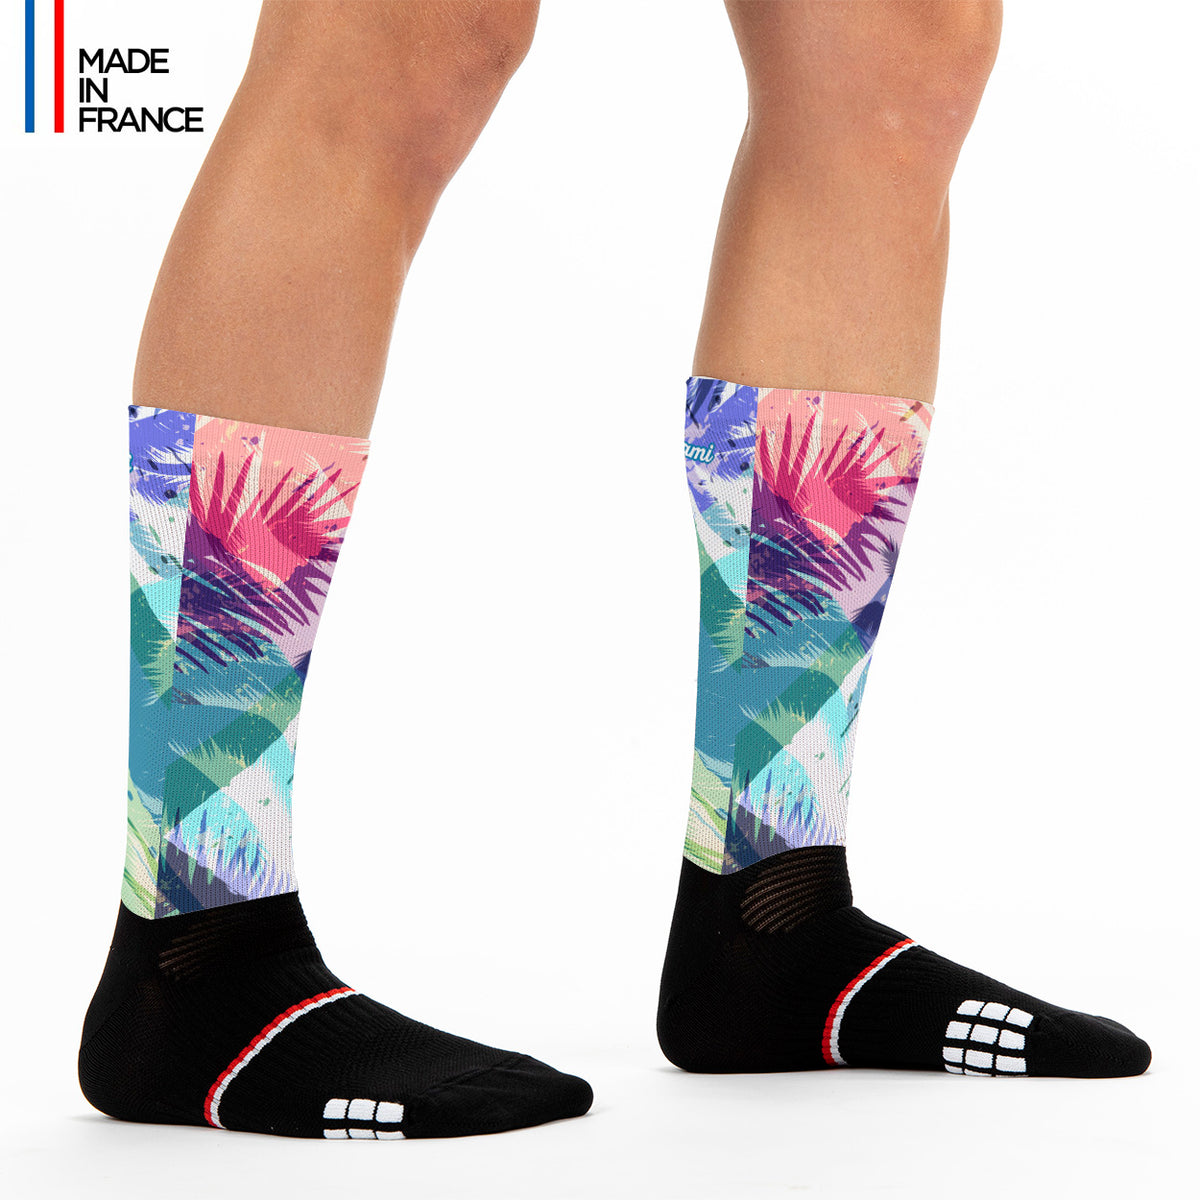 Triathlon socks color Torpik Kiwami sports